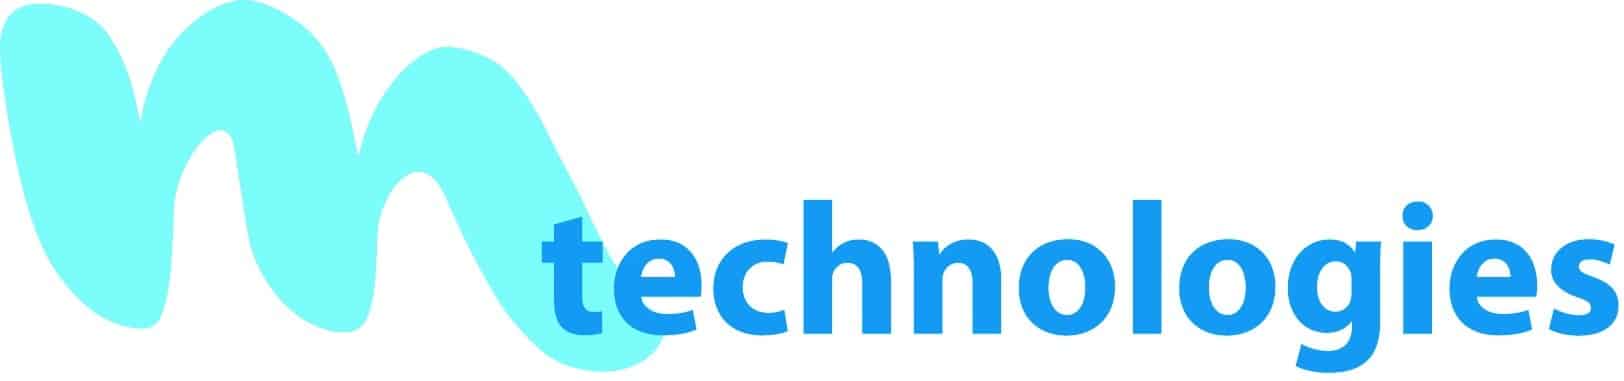 logo_mtechnologies